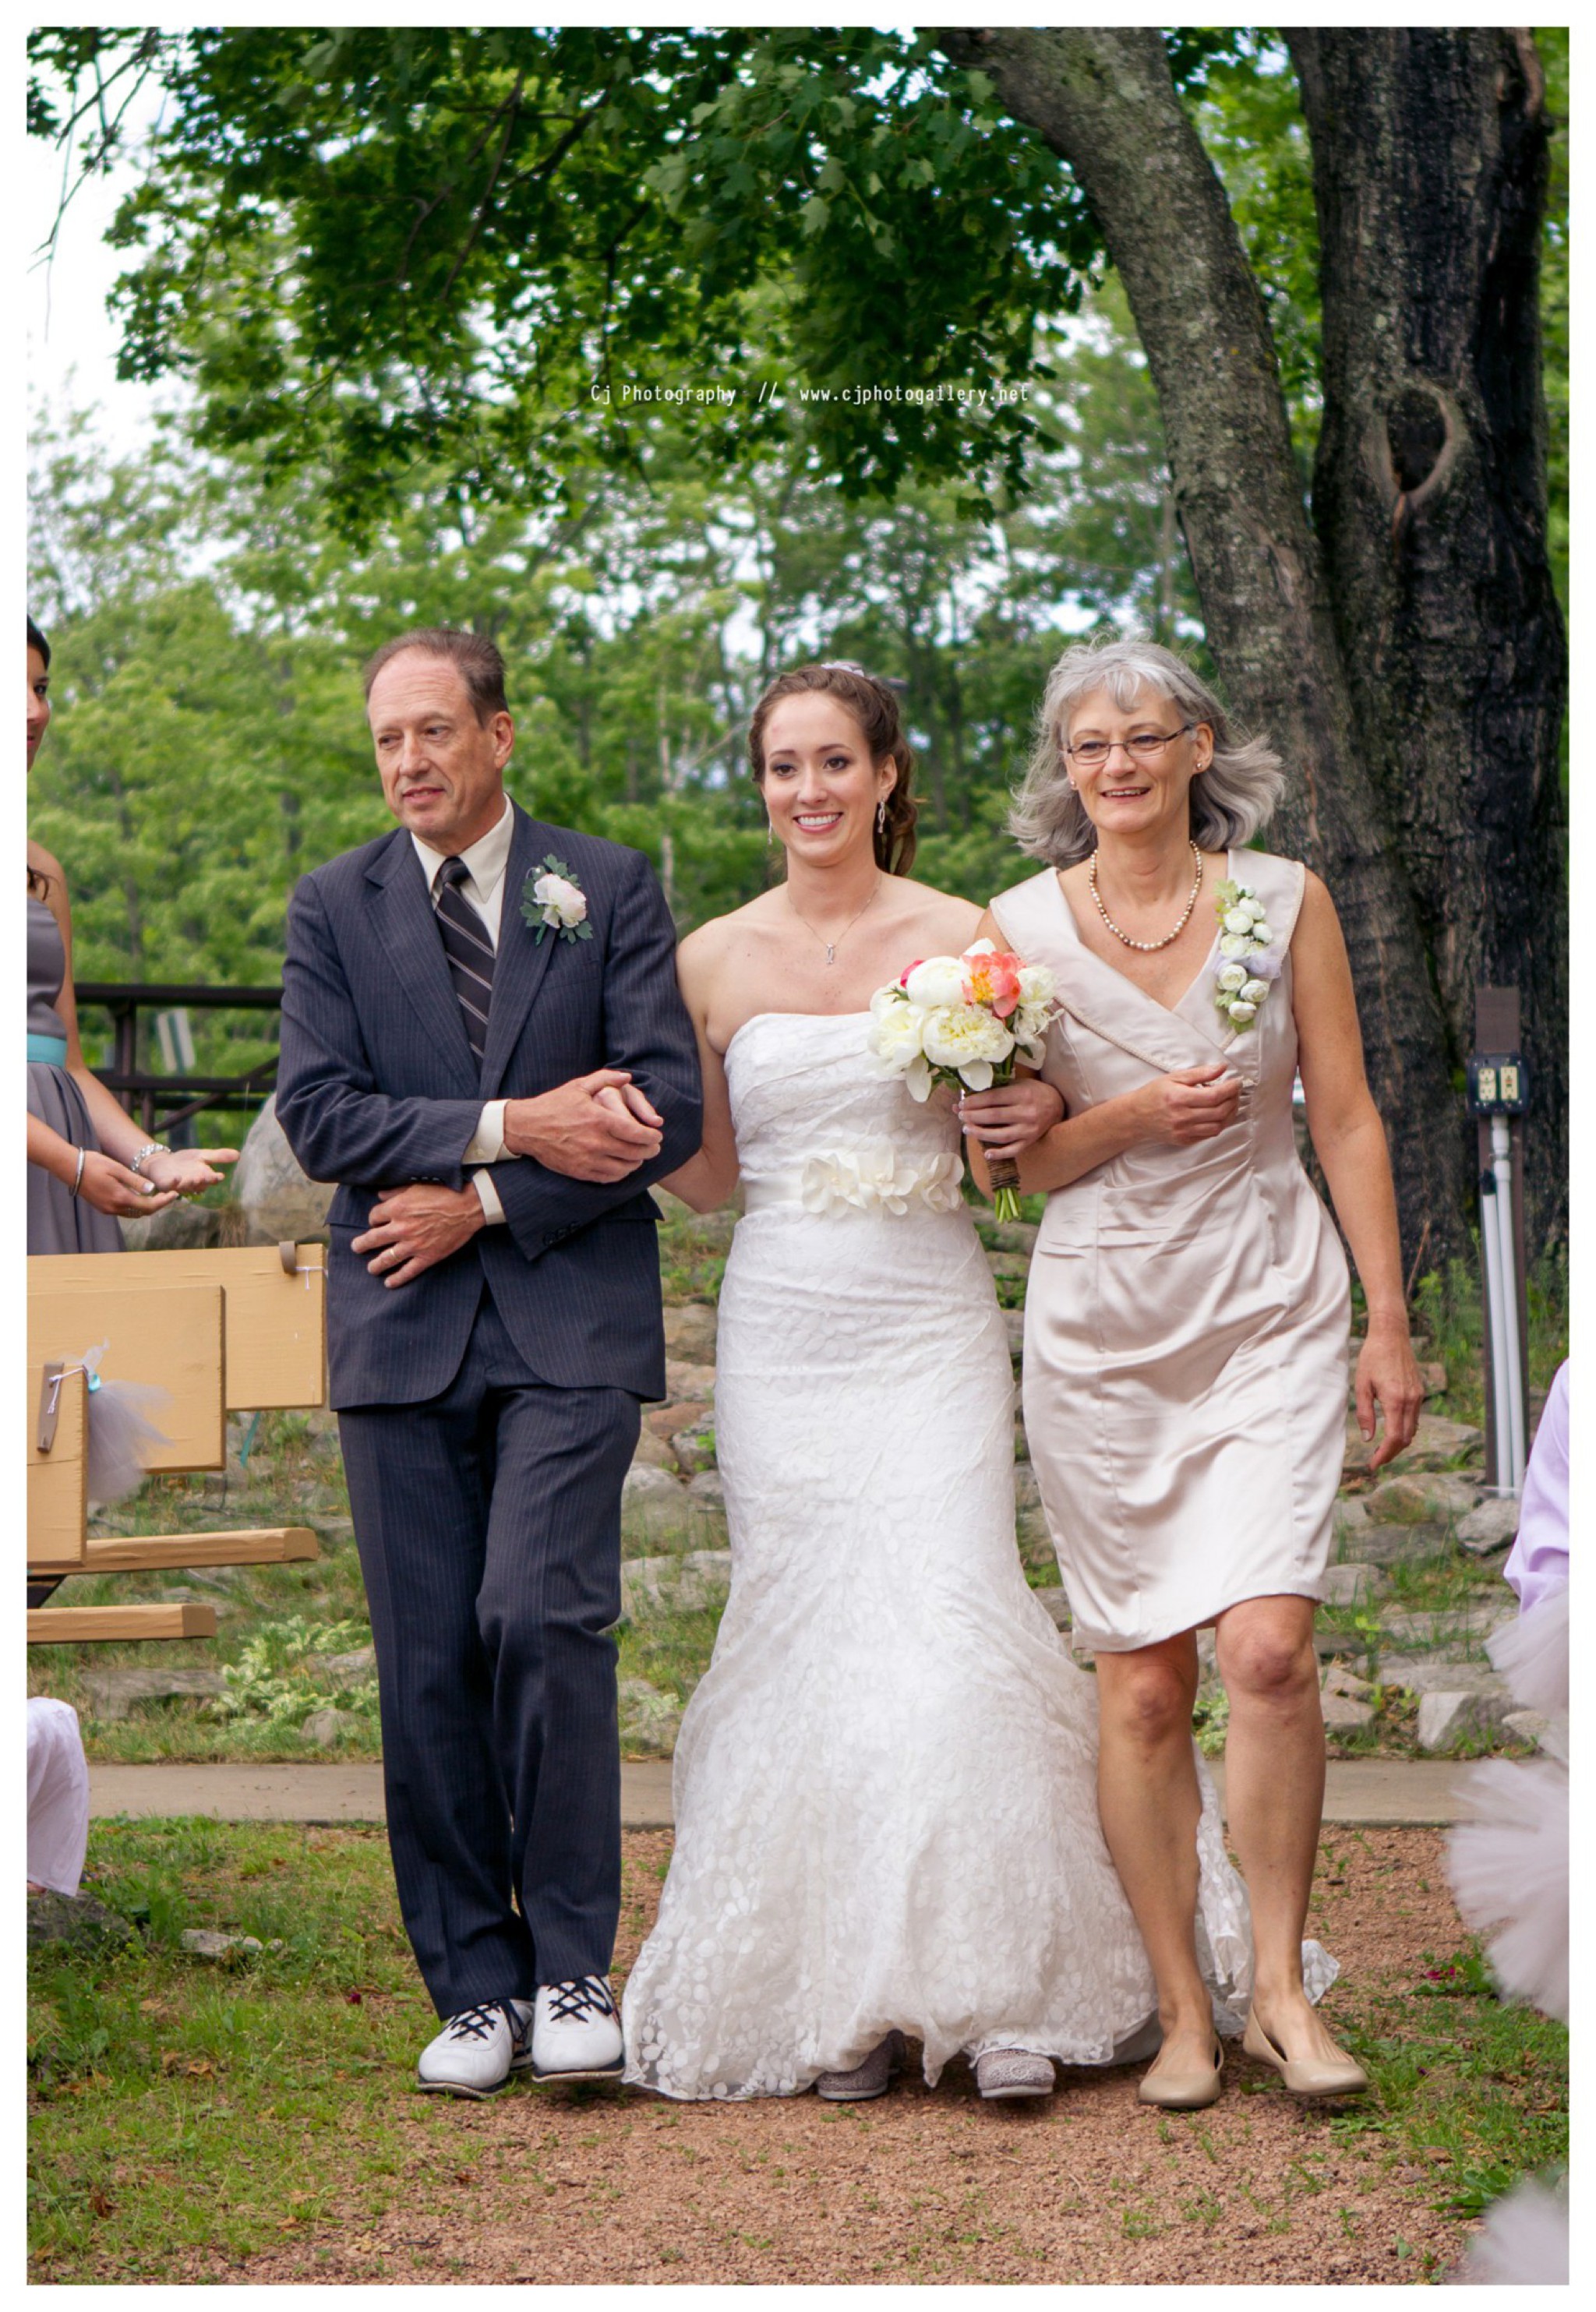 Wausau Wisconsin Wedding Photography - Cj Photography